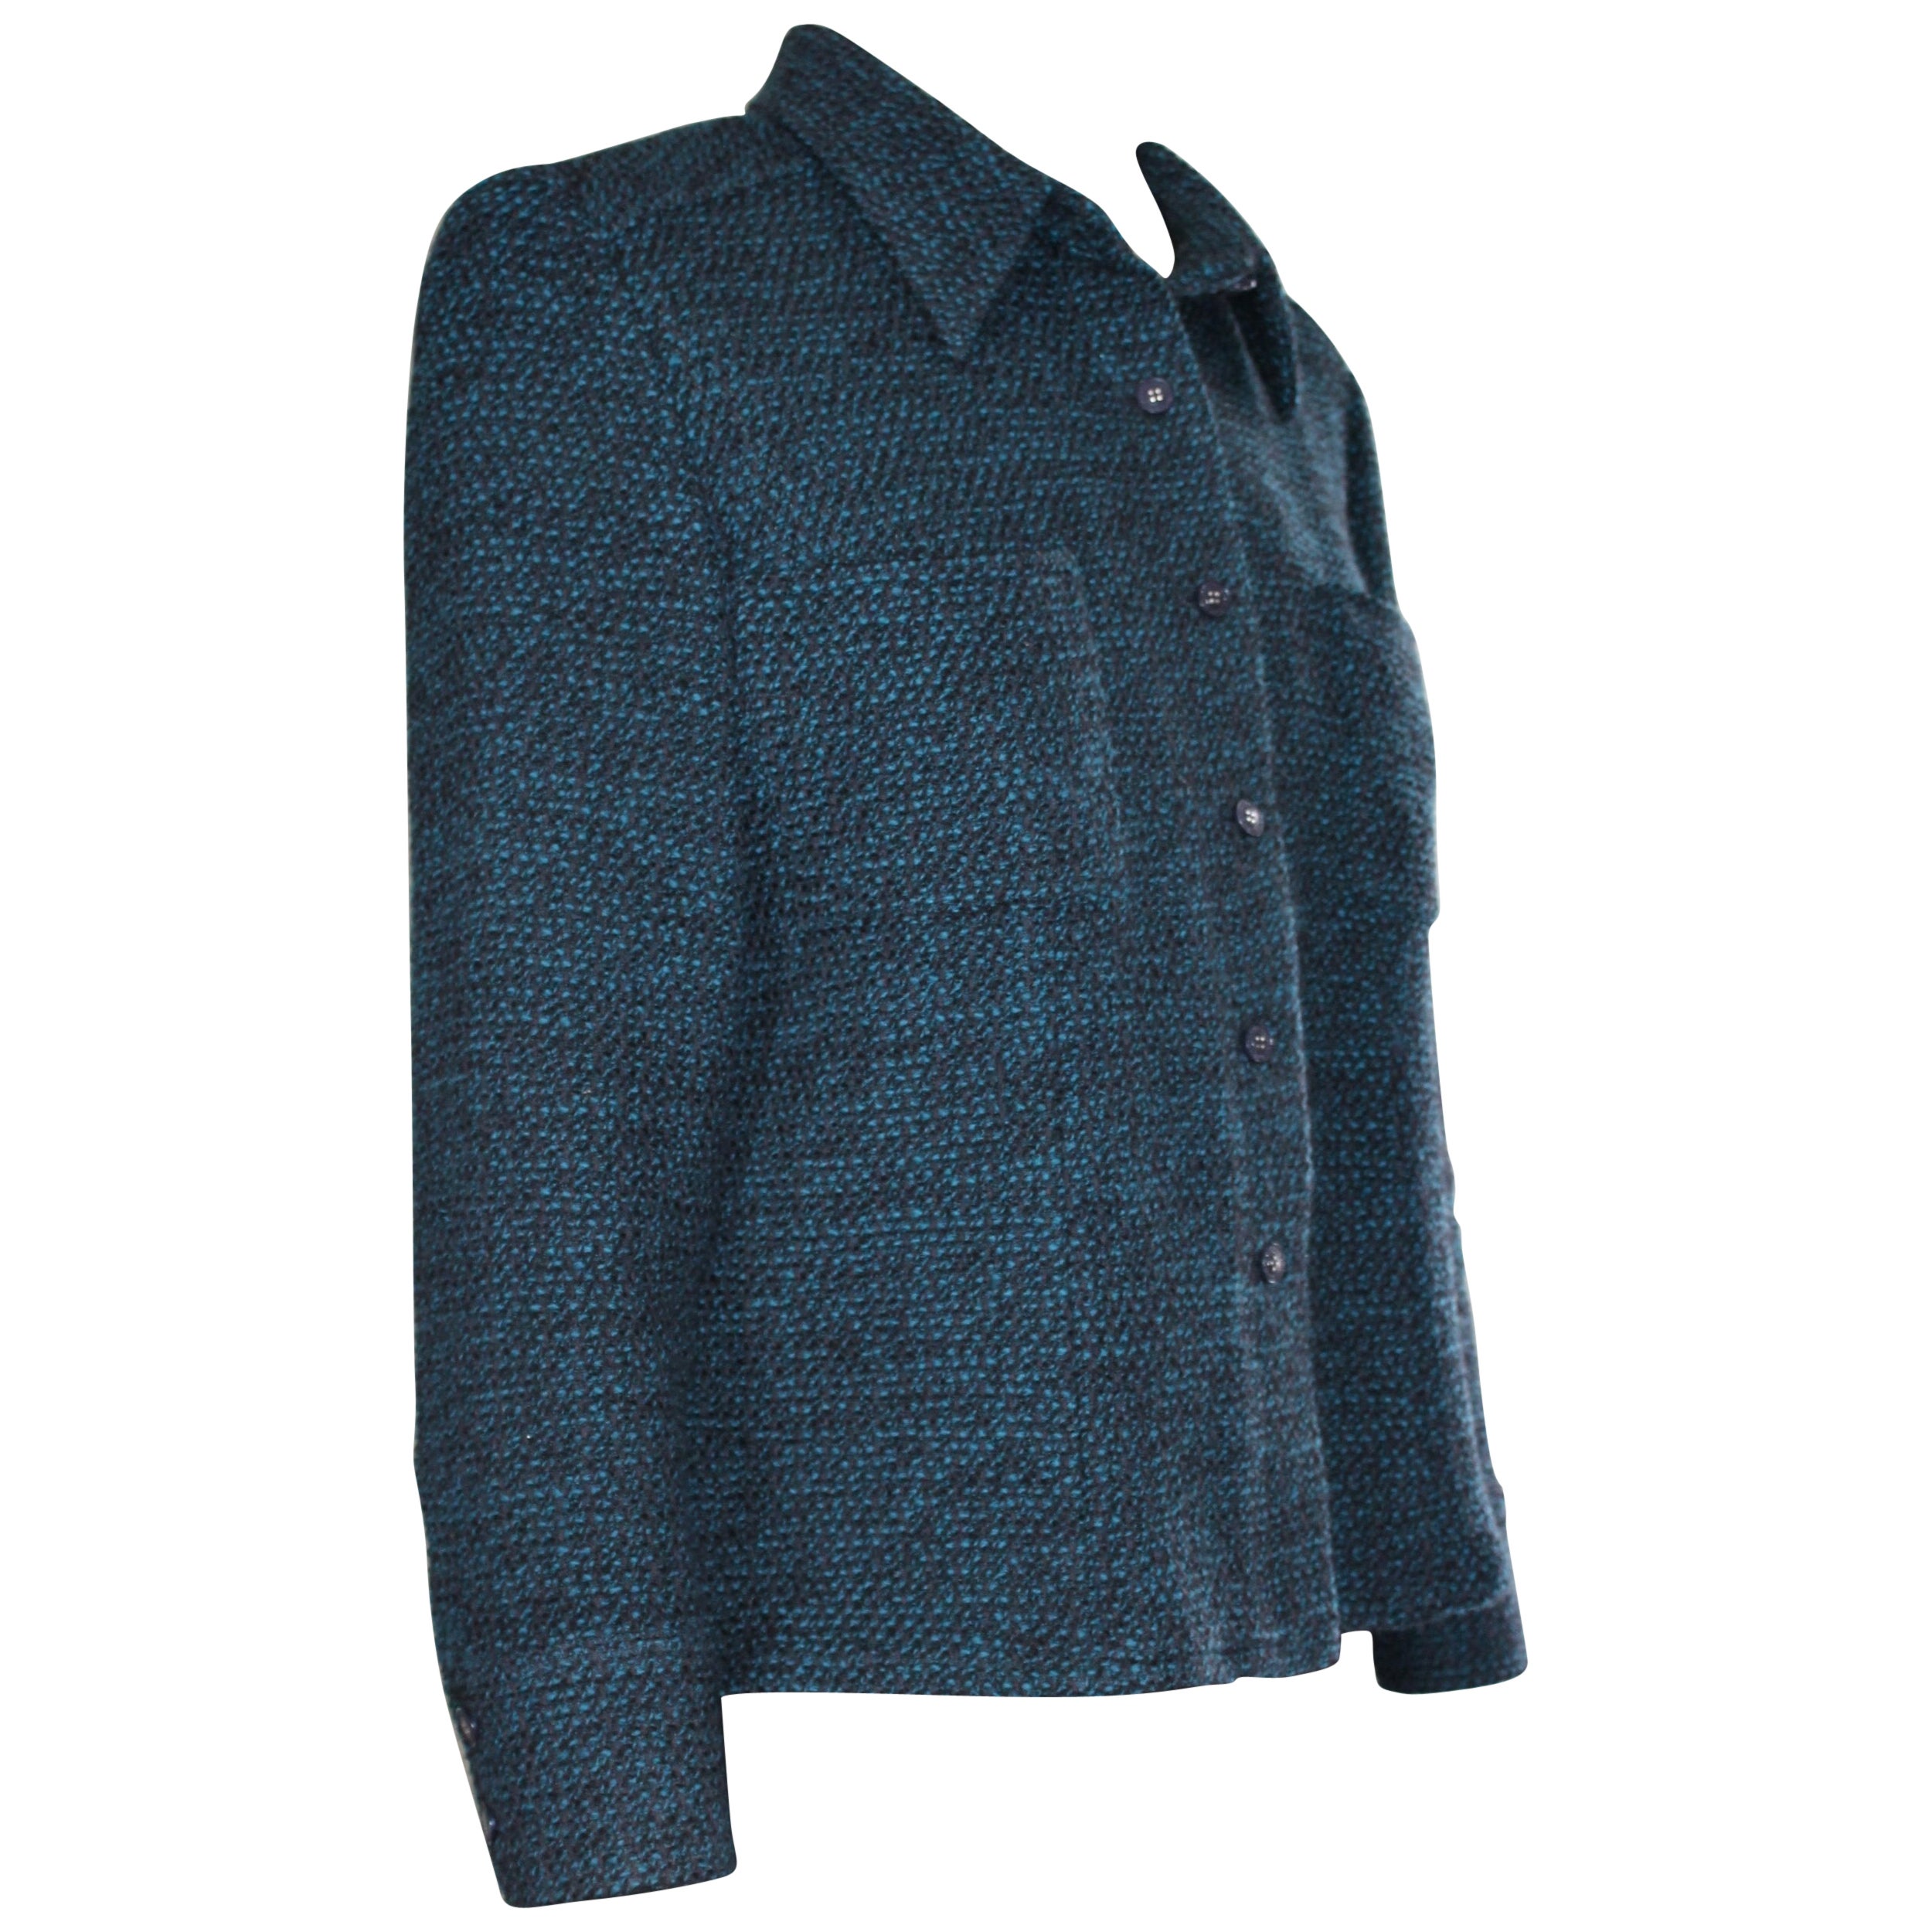 Chanel Tweed Jacket For Sale